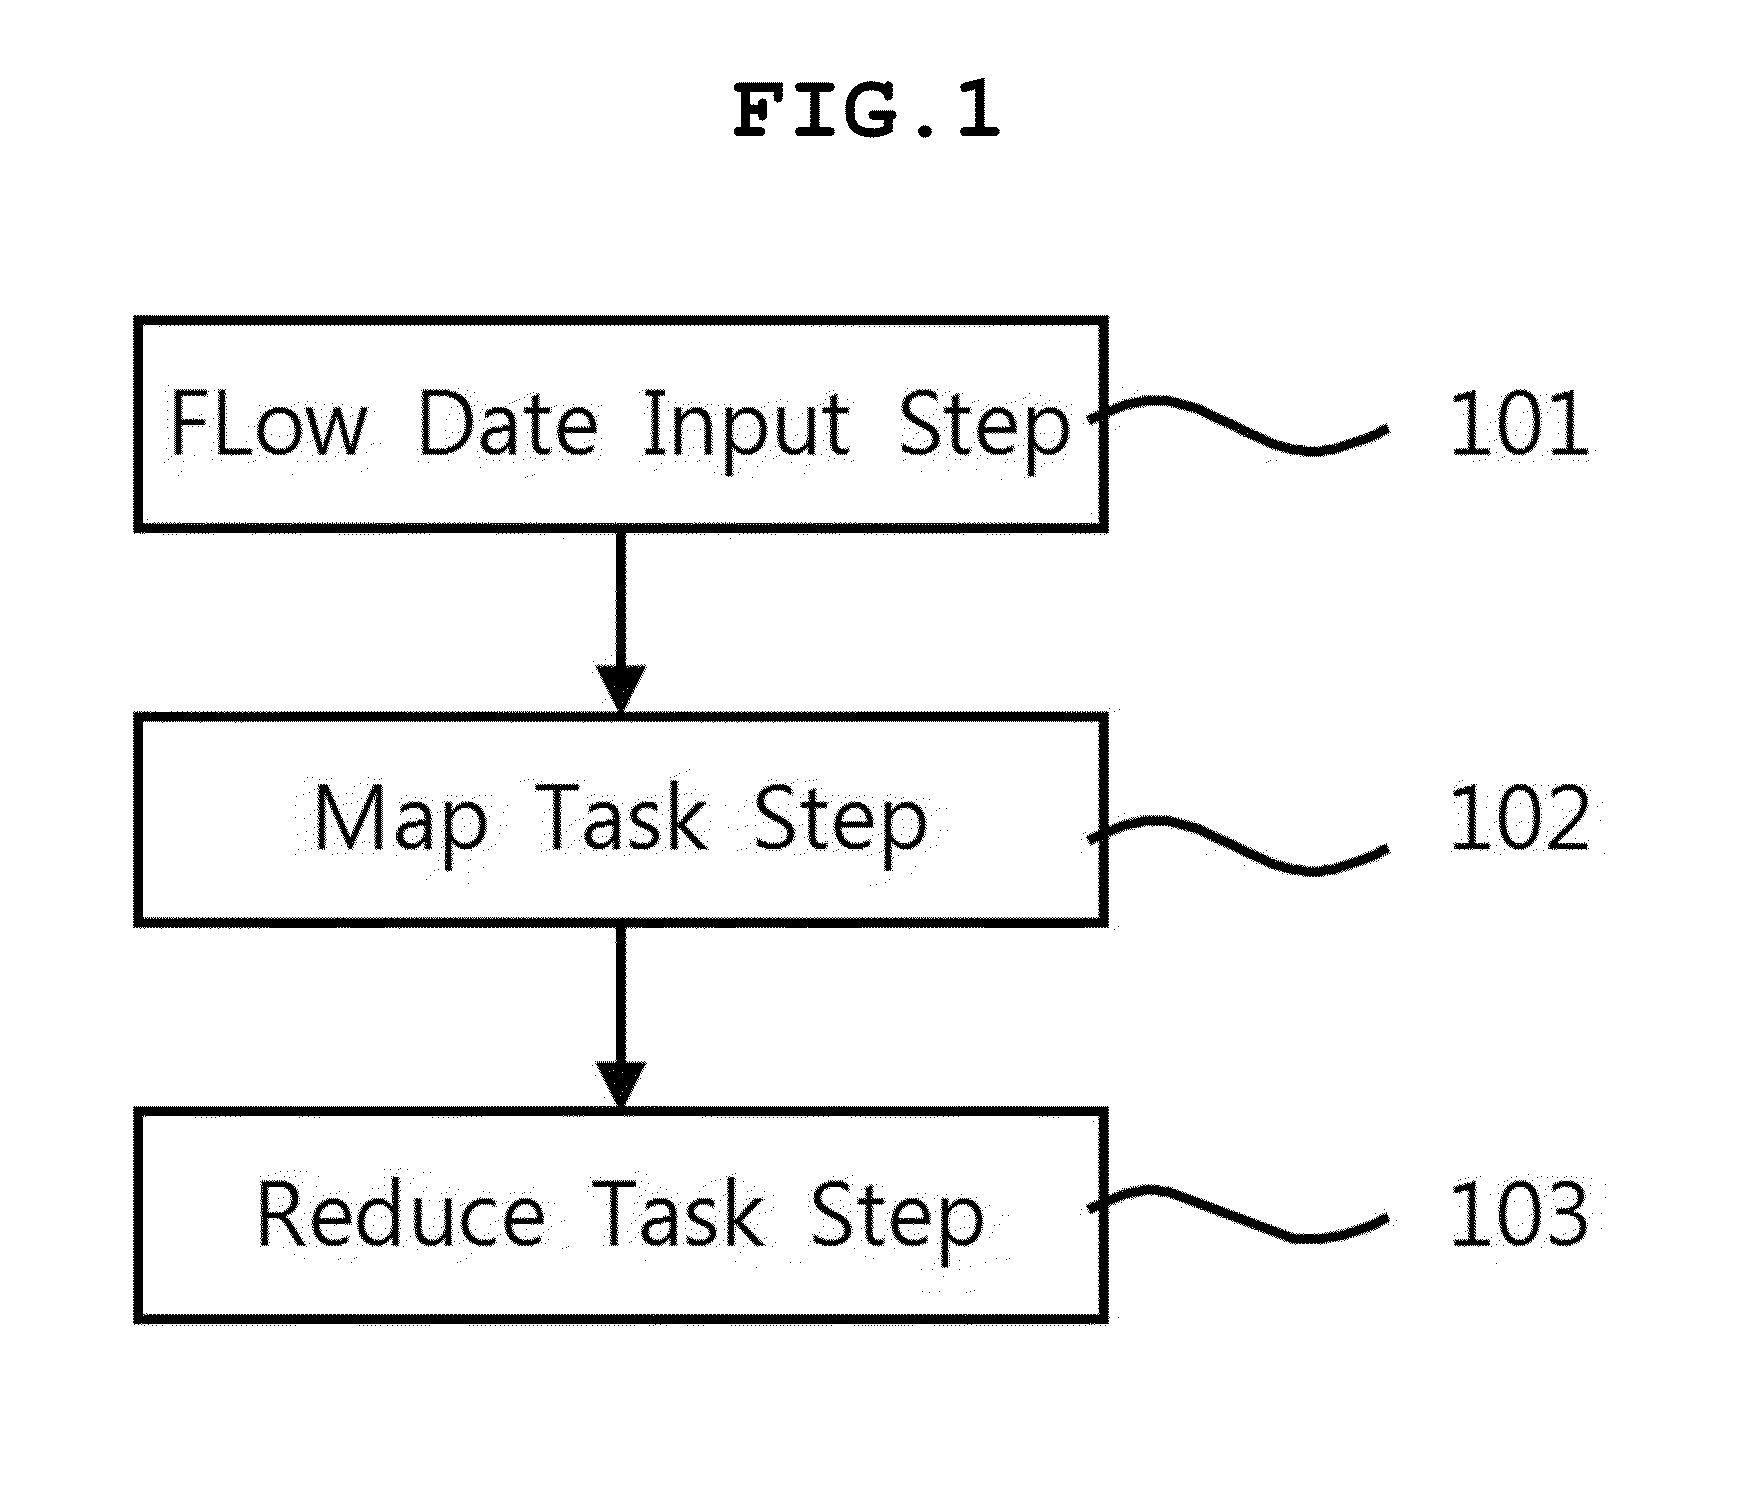 Internet flow data analysis method using parallel computations